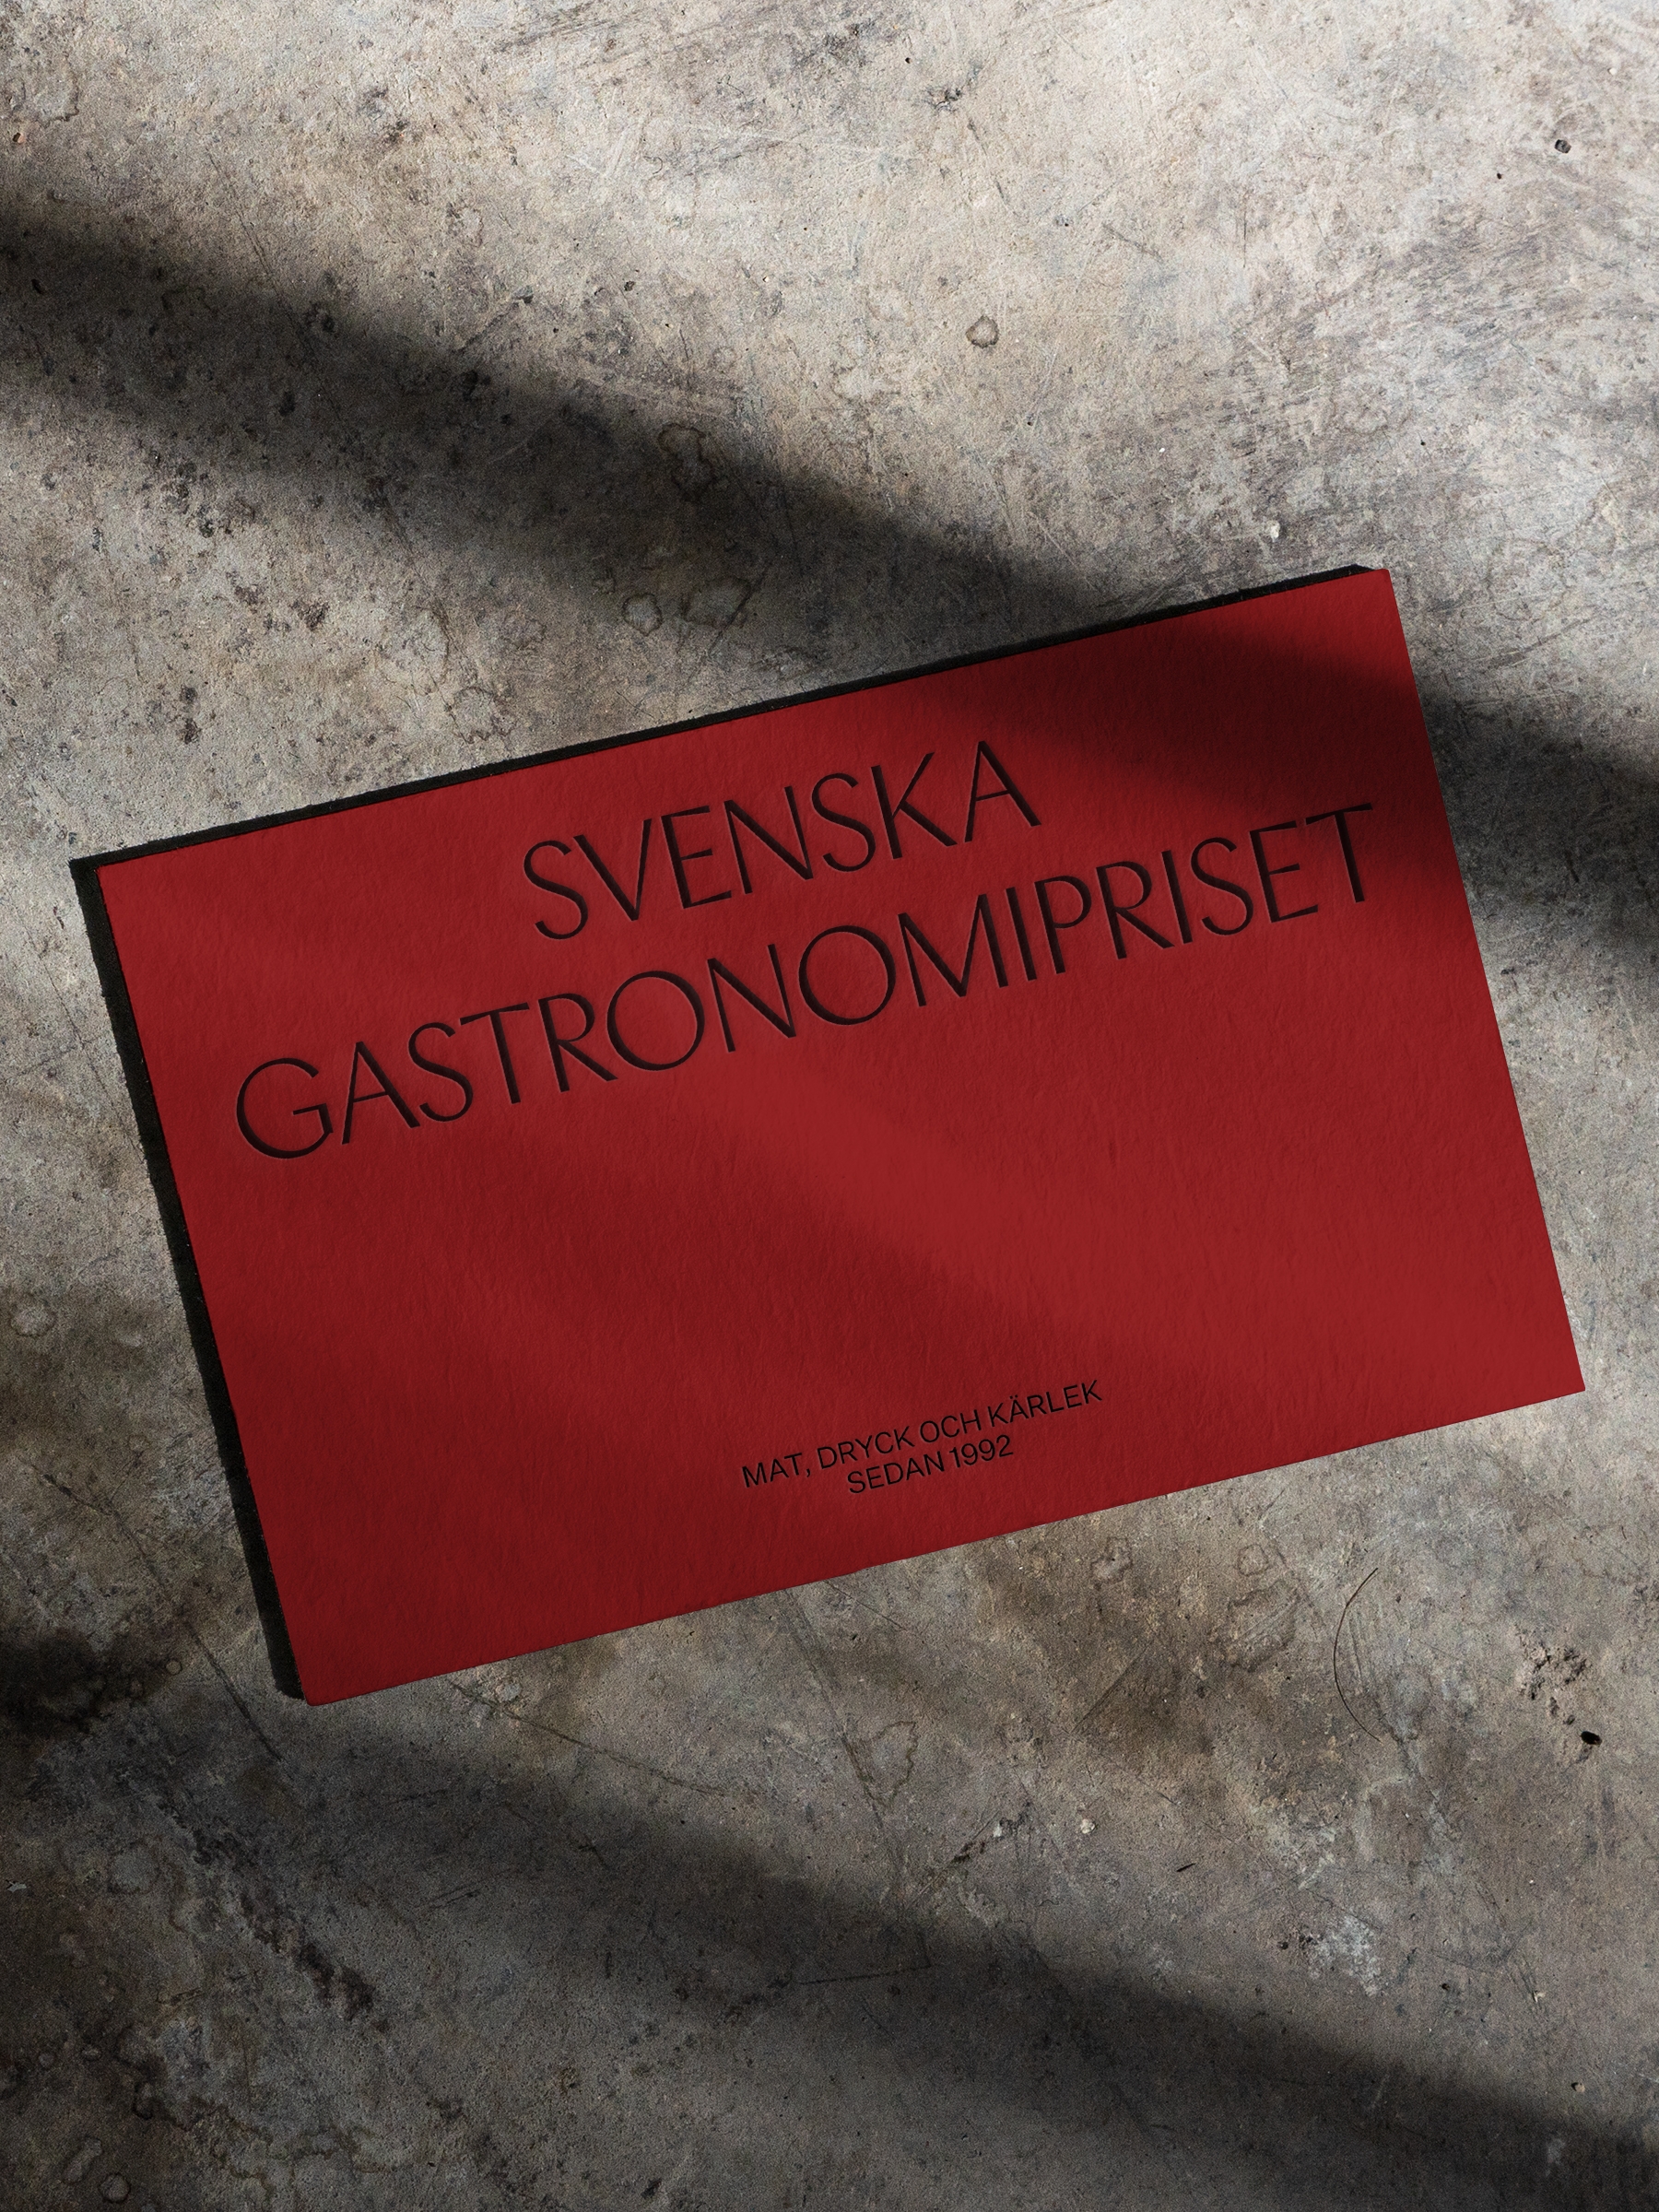 Example applicaton on business card for Svenska Gastronomipriset